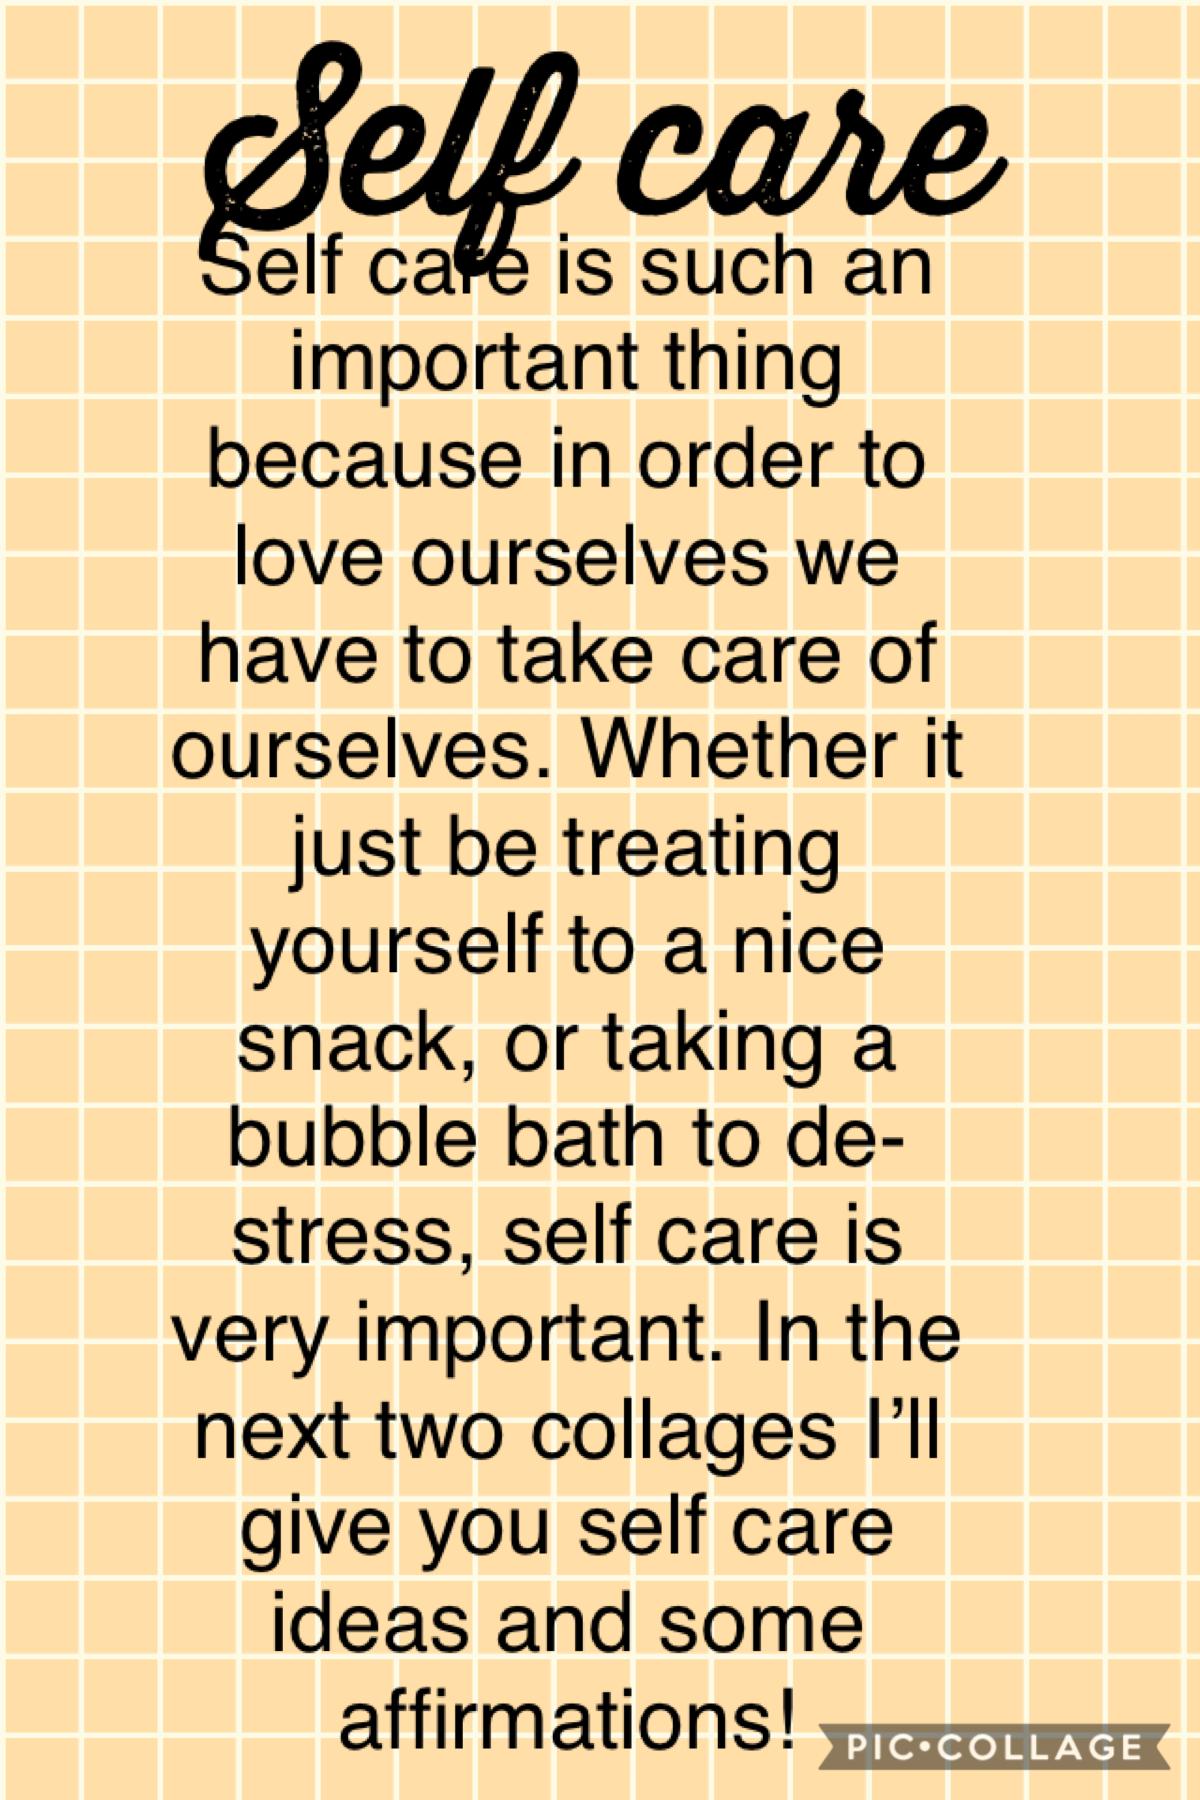 Let’s make July self care month 💖